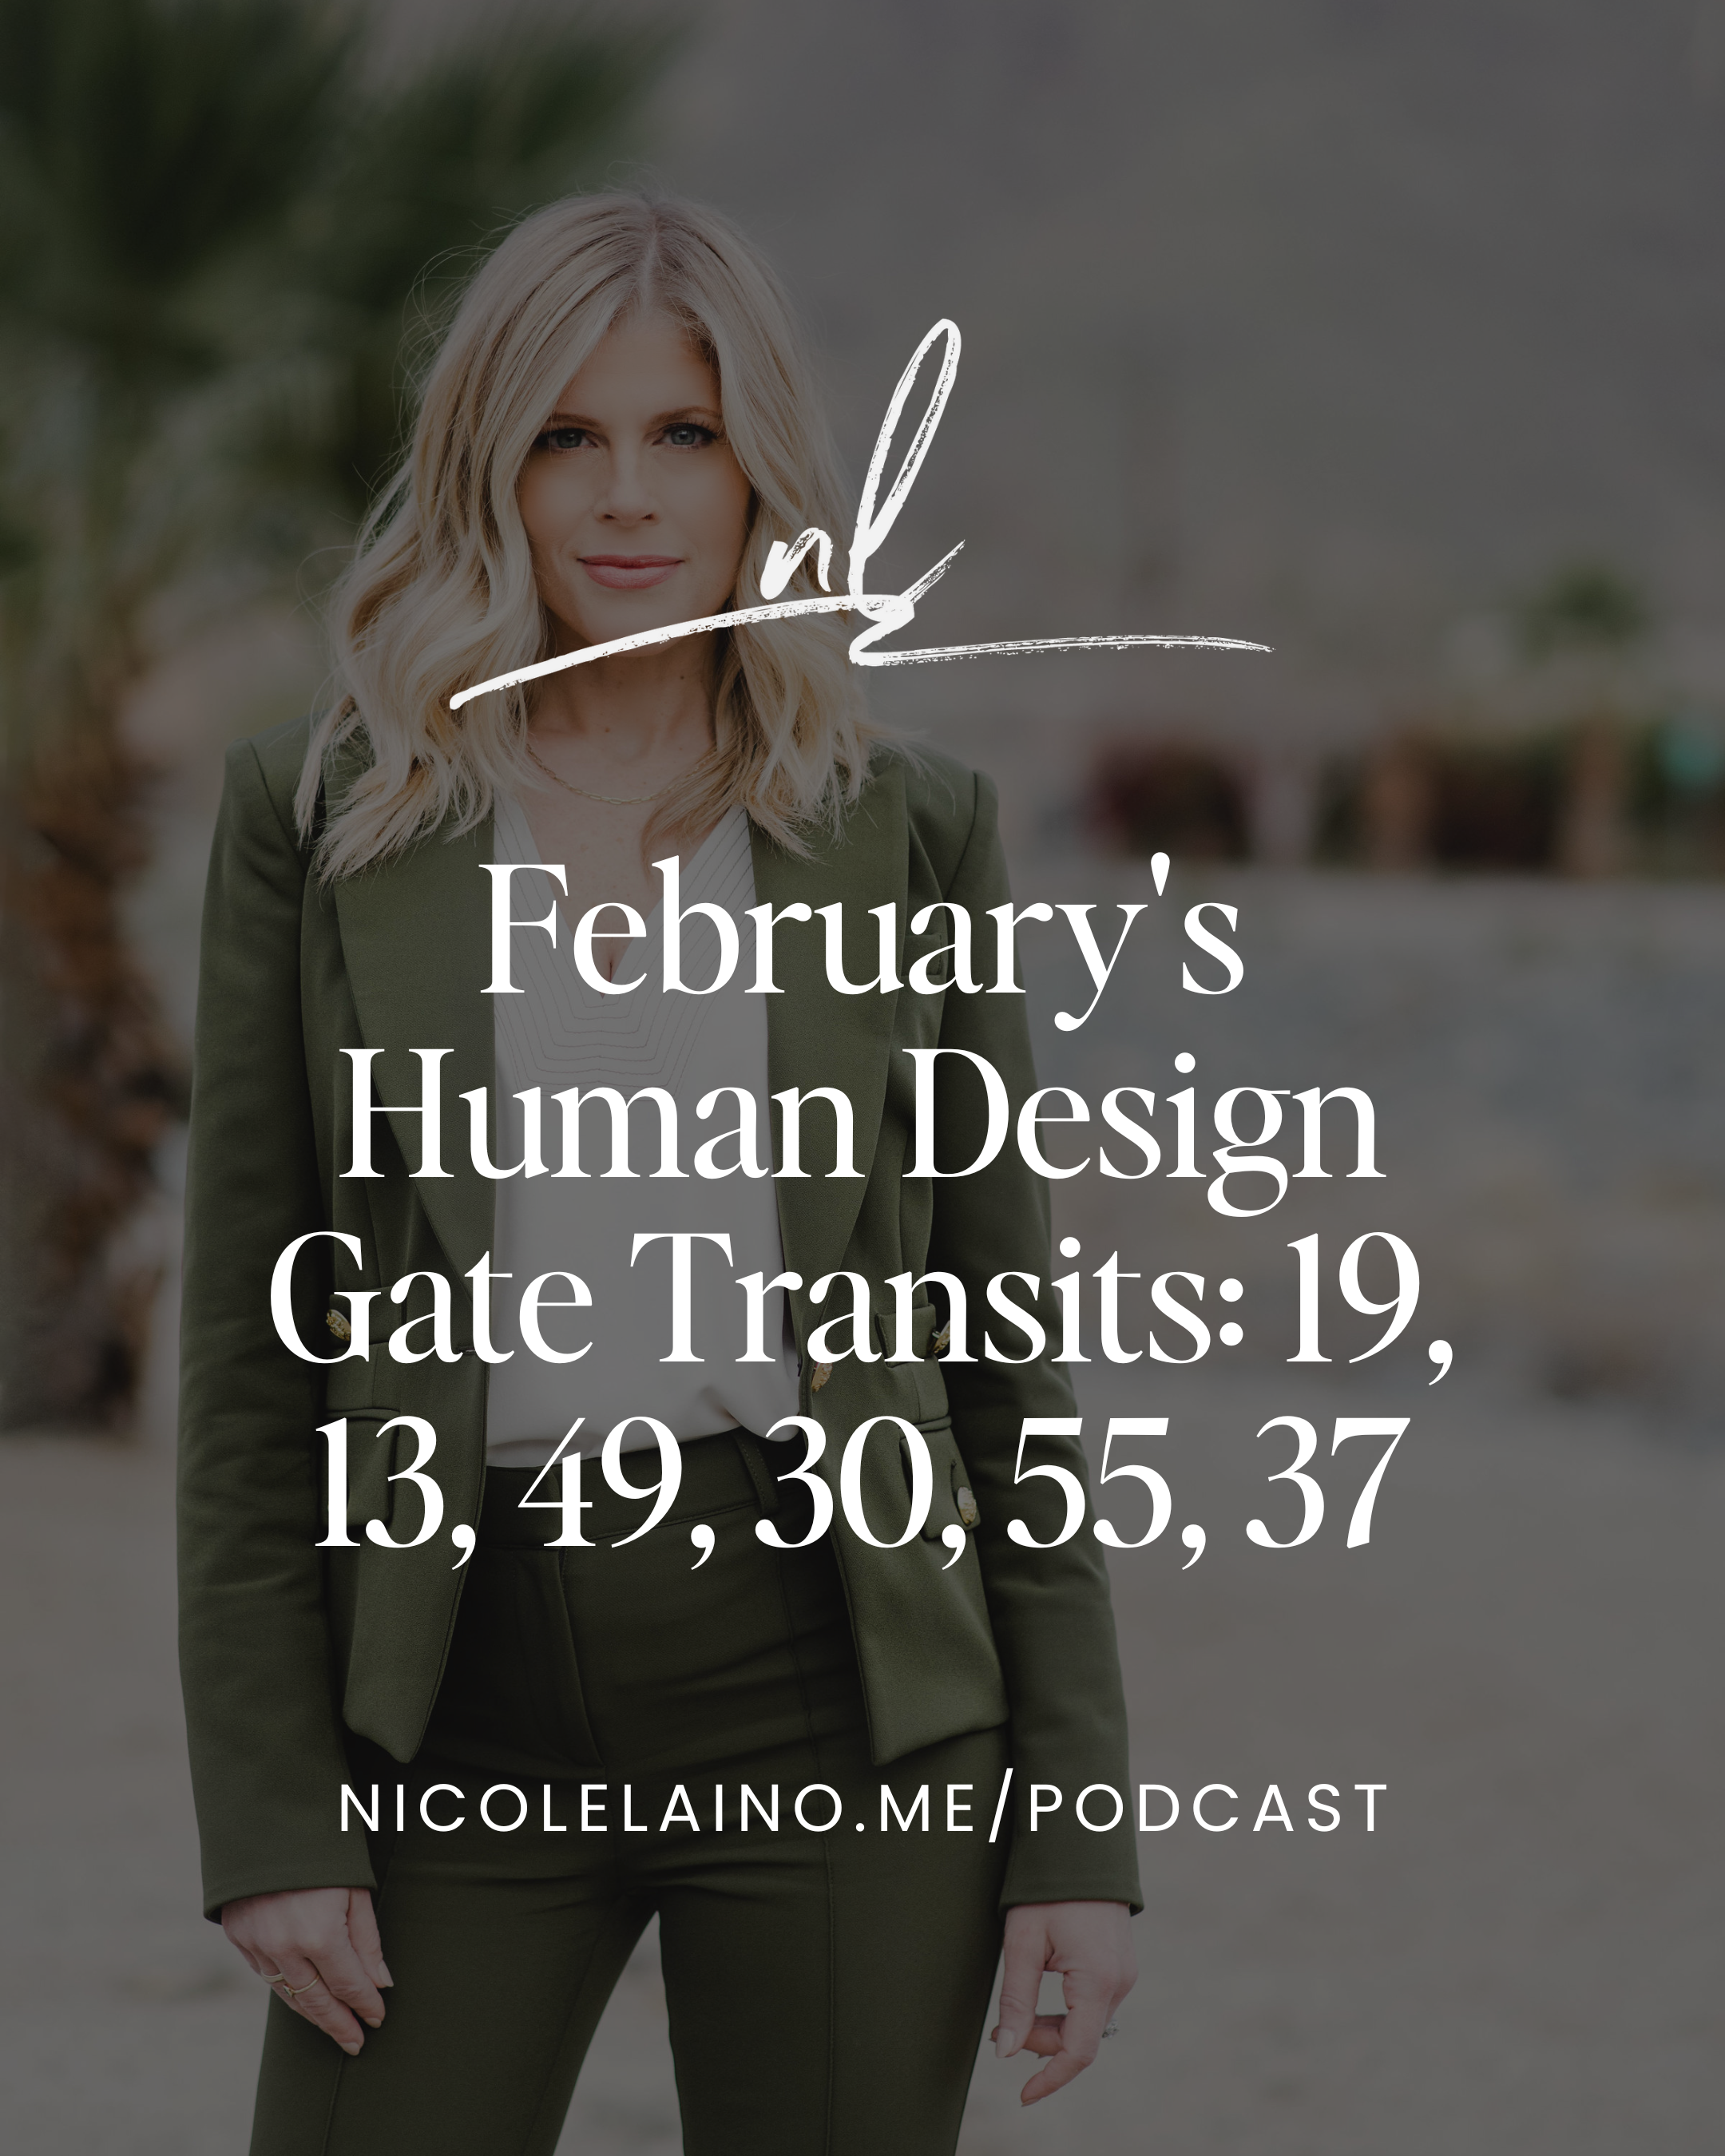 February's Human Design Gate Transits: 19, 13, 49, 30, 55, 37